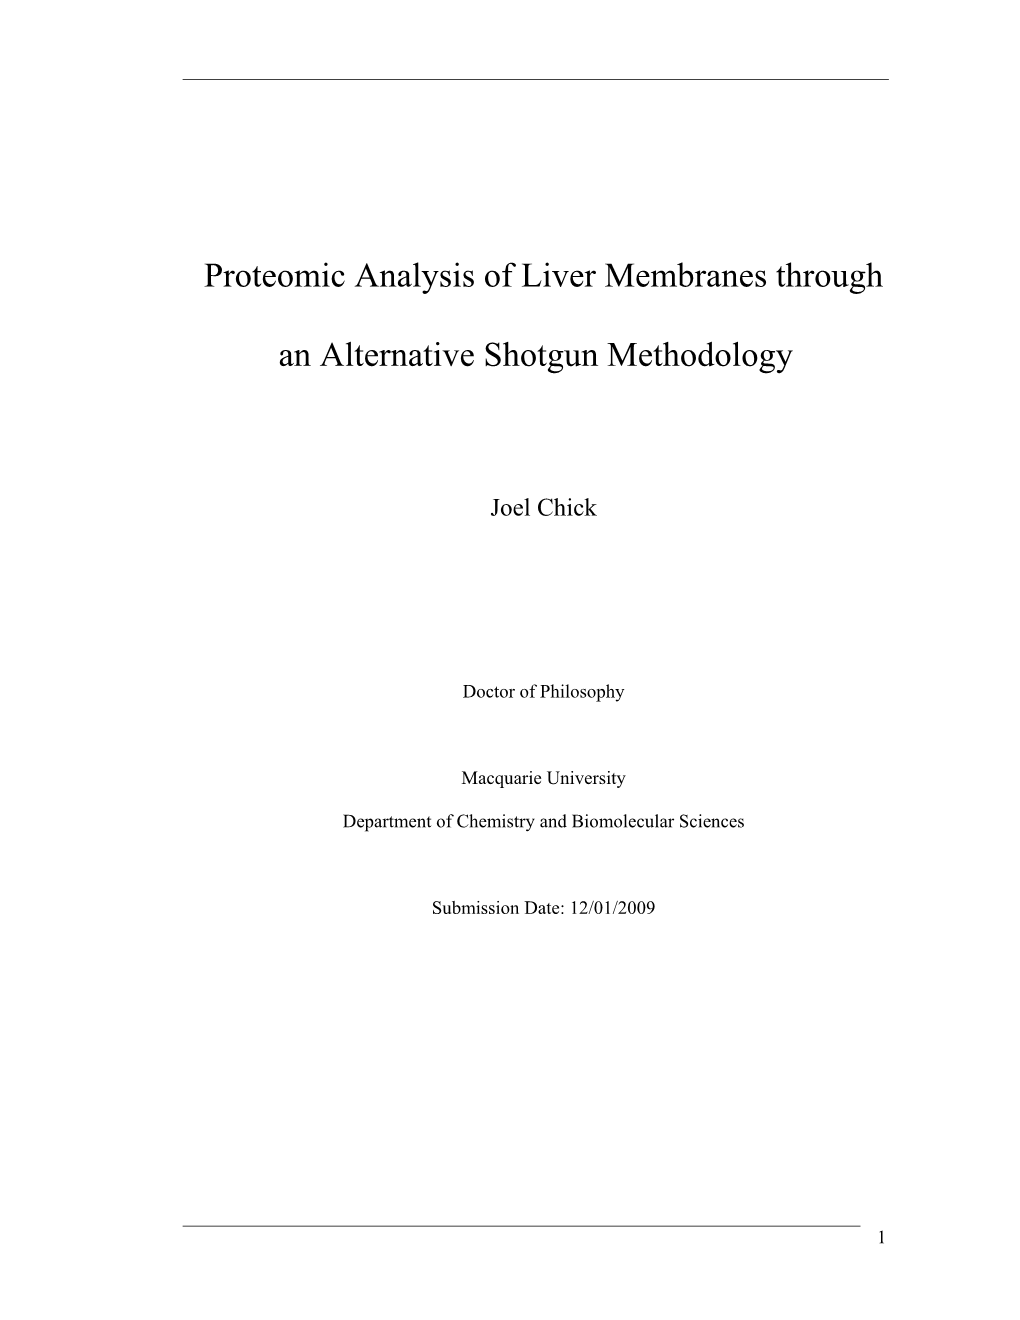 Proteomic Analysis of Liver Membranes Through an Alternative